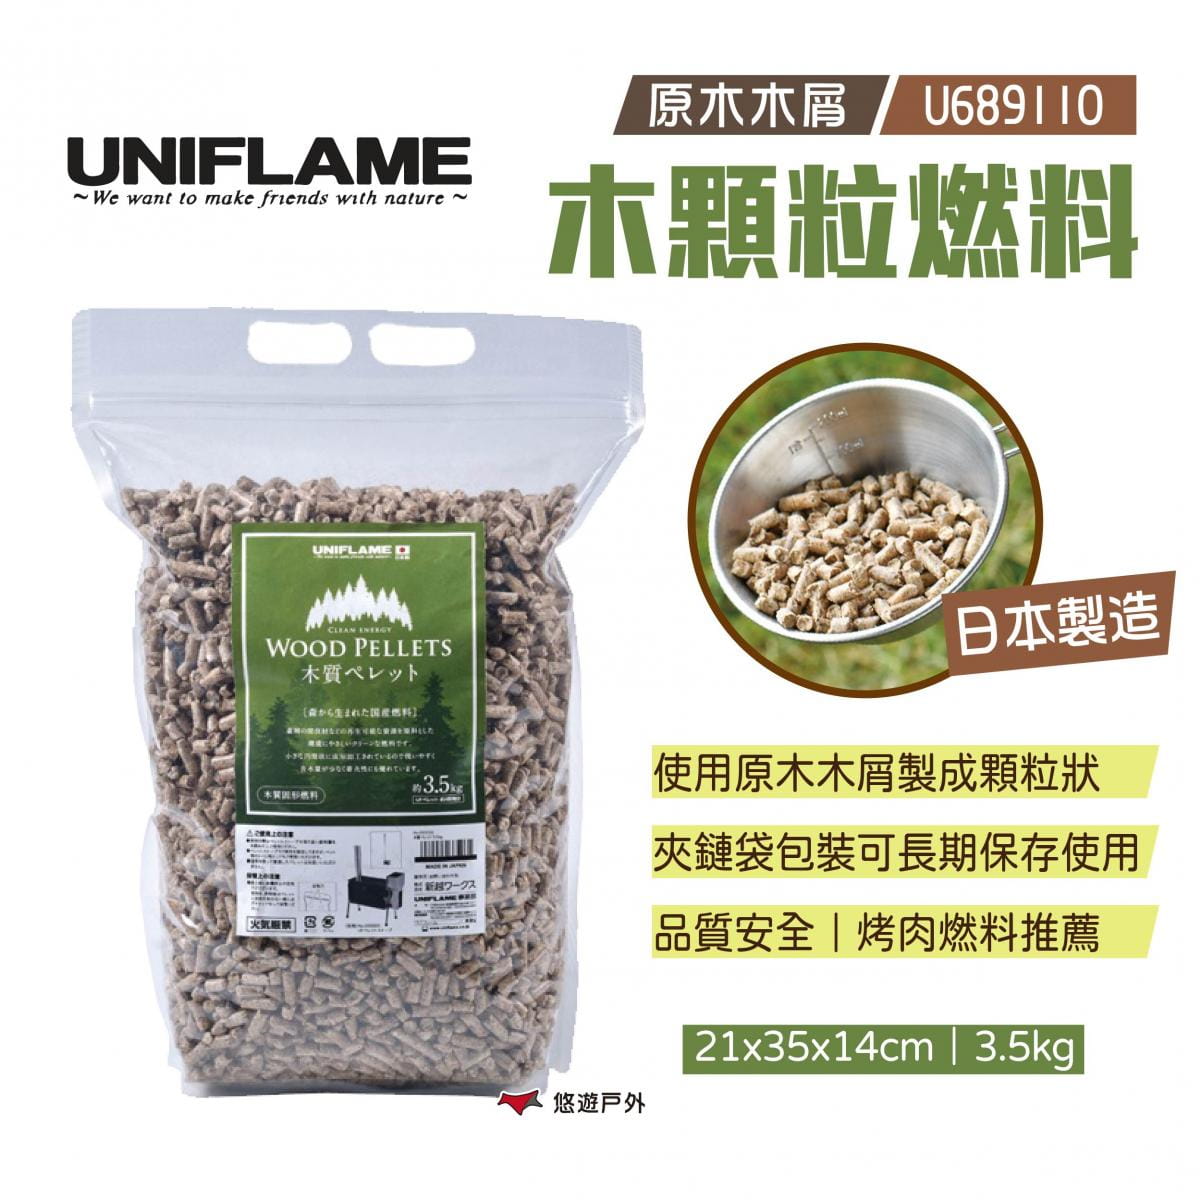 【UNIFLAME】木顆粒燃料 3.5KG U689110 (悠遊戶外) 0